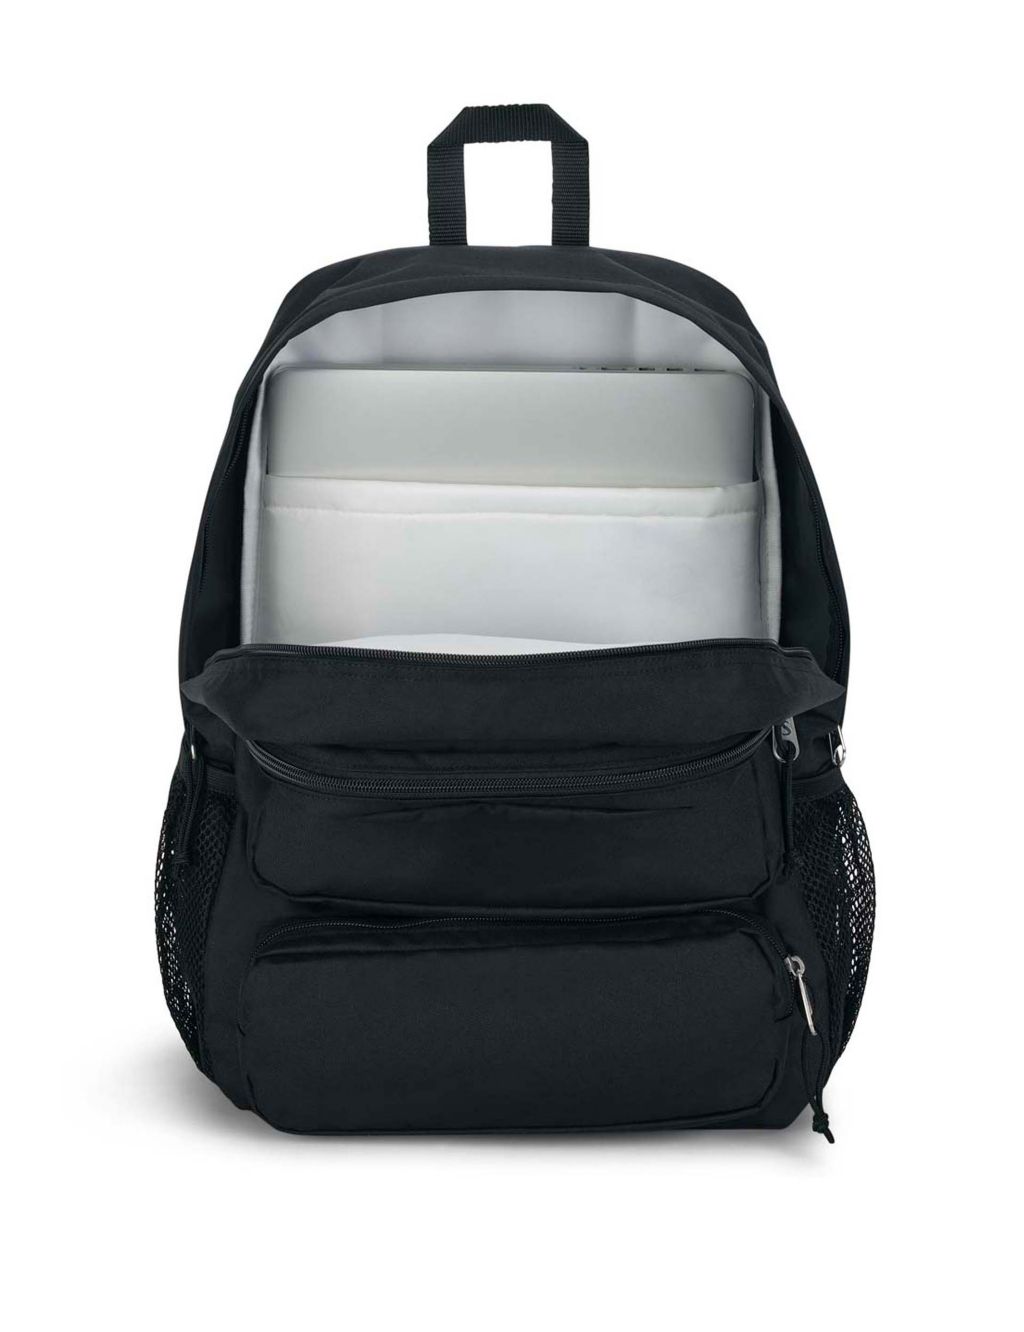 Doubleton Multi Pocket Backpack 8 of 8